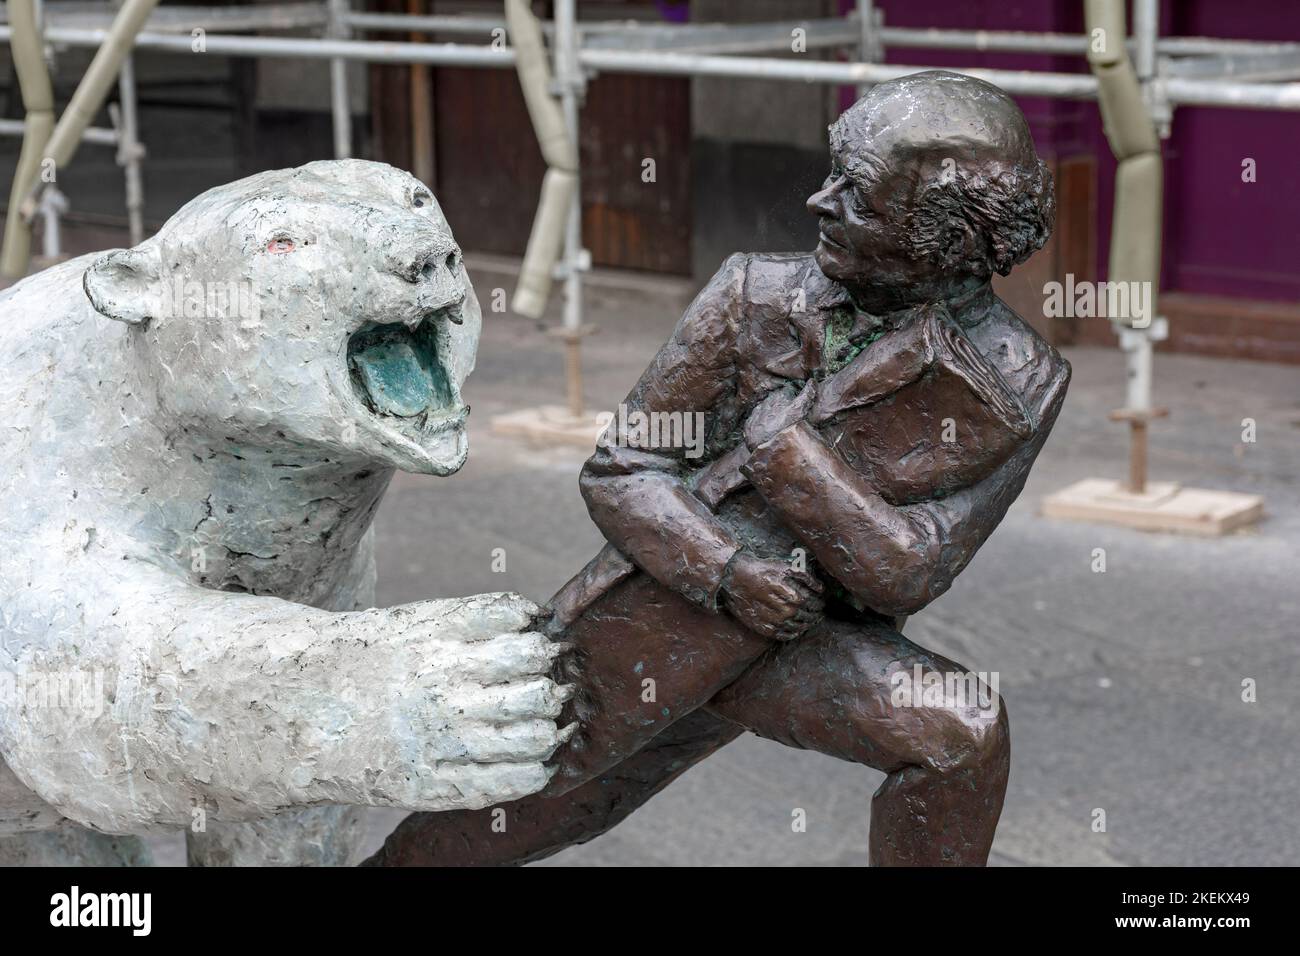 Bruin the Polar Bear statue, by David Annand, High Street, Dundee, Scotland, UK Stock Photo